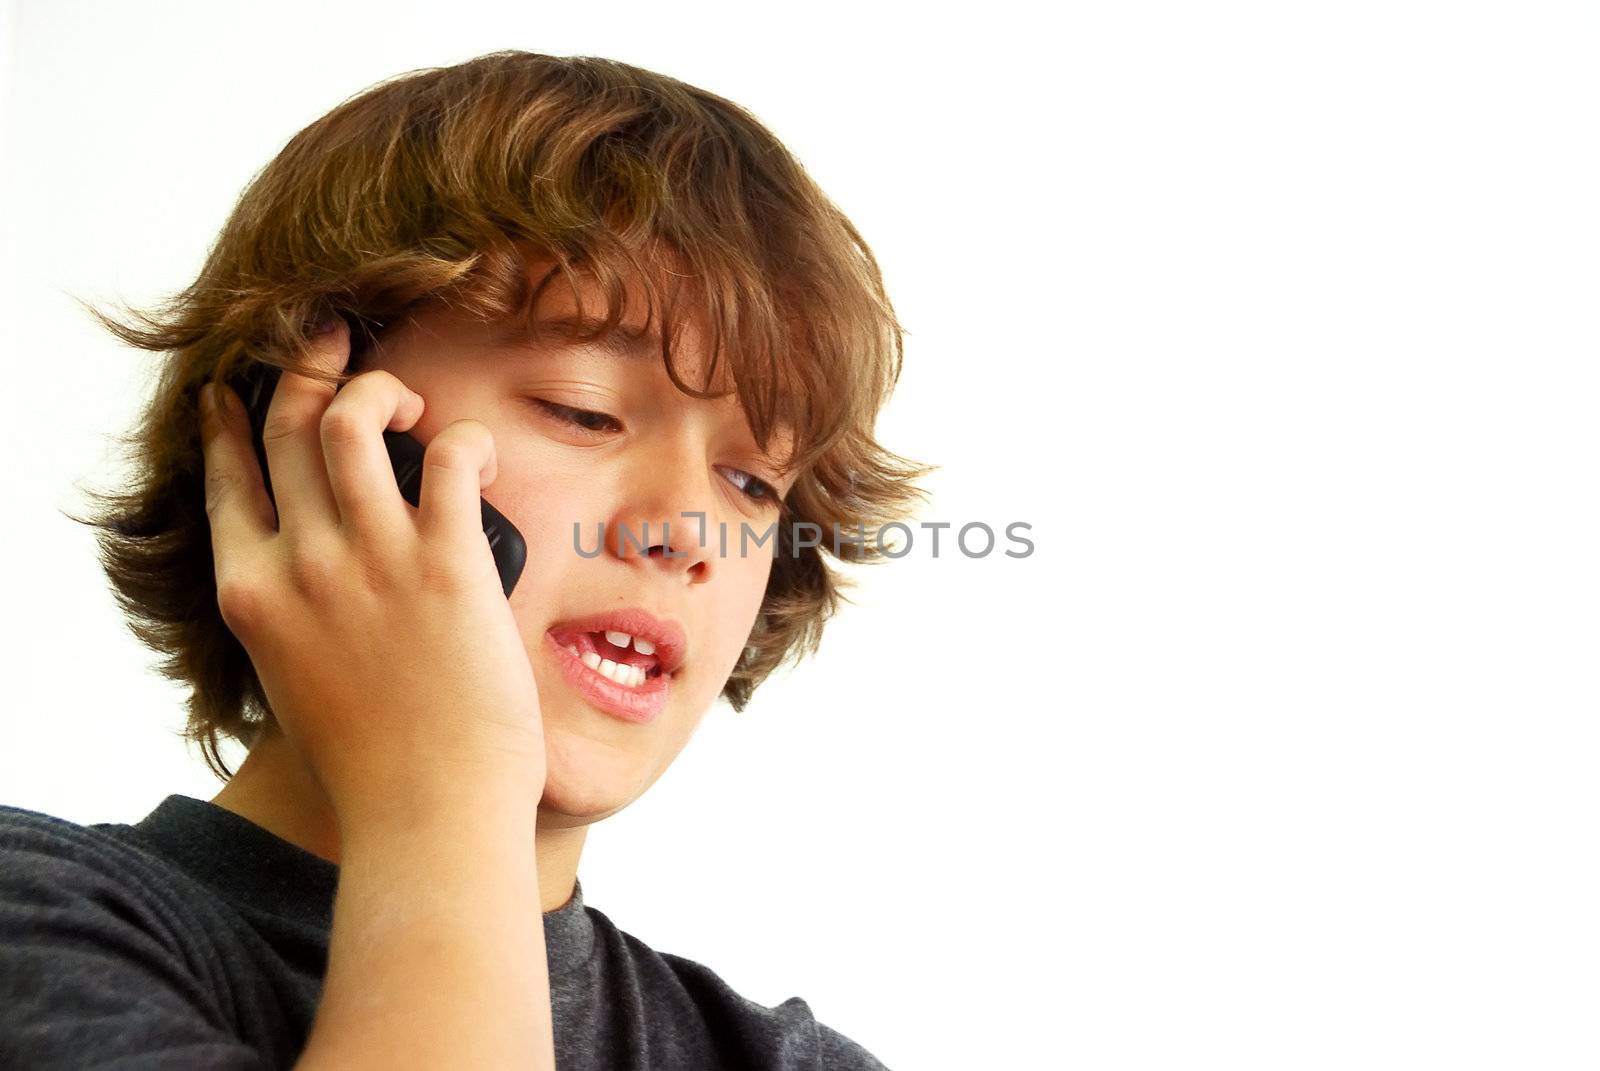 Teenage Boy Talking on Mobile Phone by goldenangel